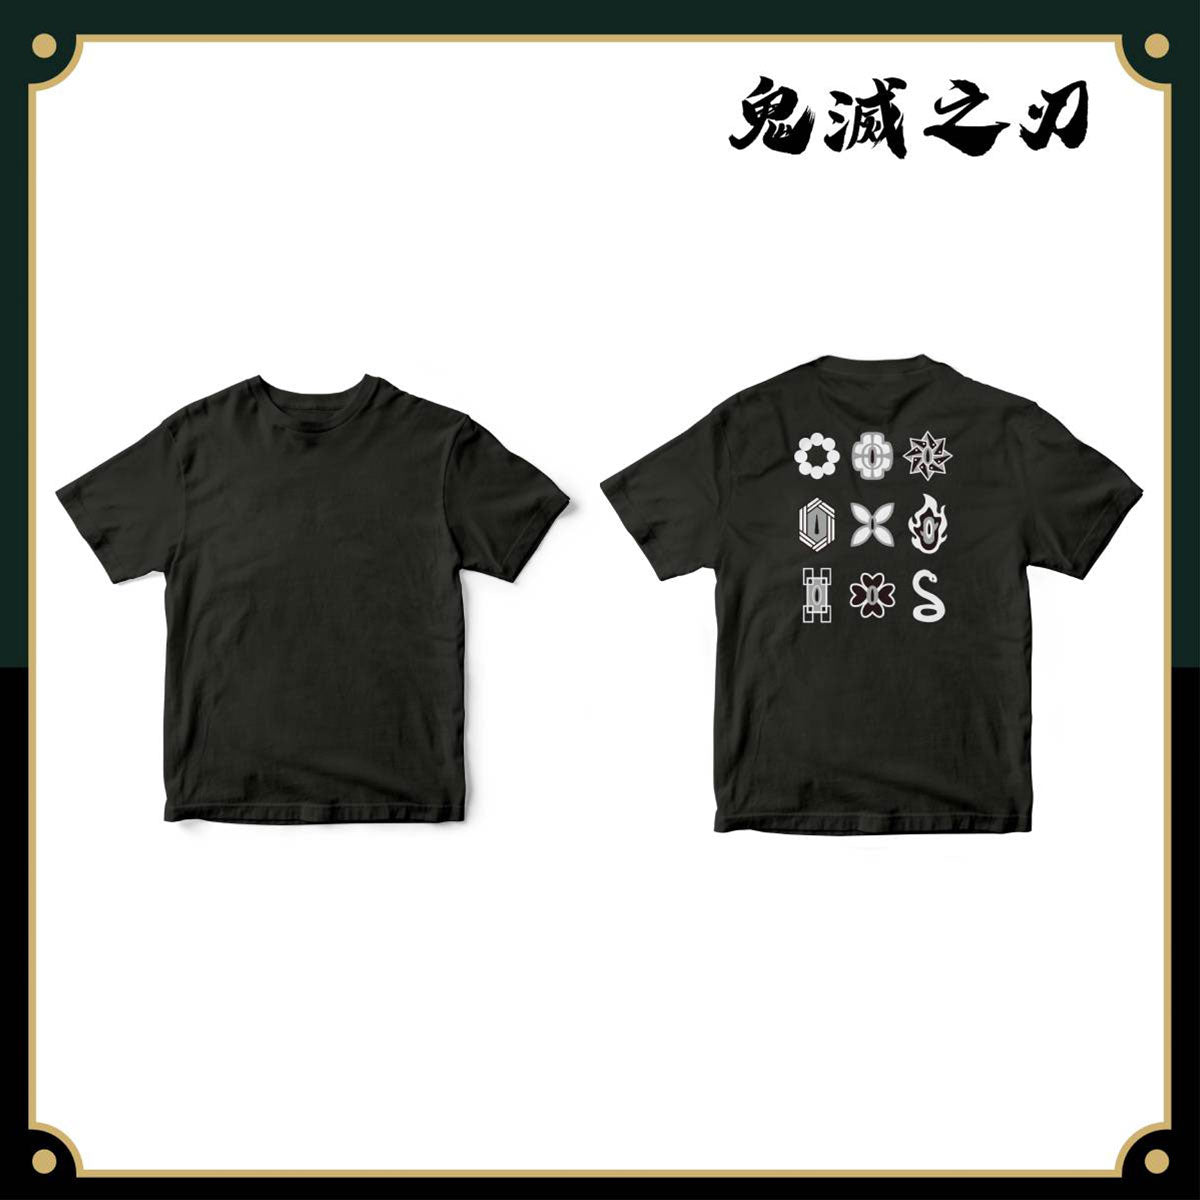 鬼滅之刃 童裝T-shirt 九柱集合 黑色 服裝 Microworks Online Store